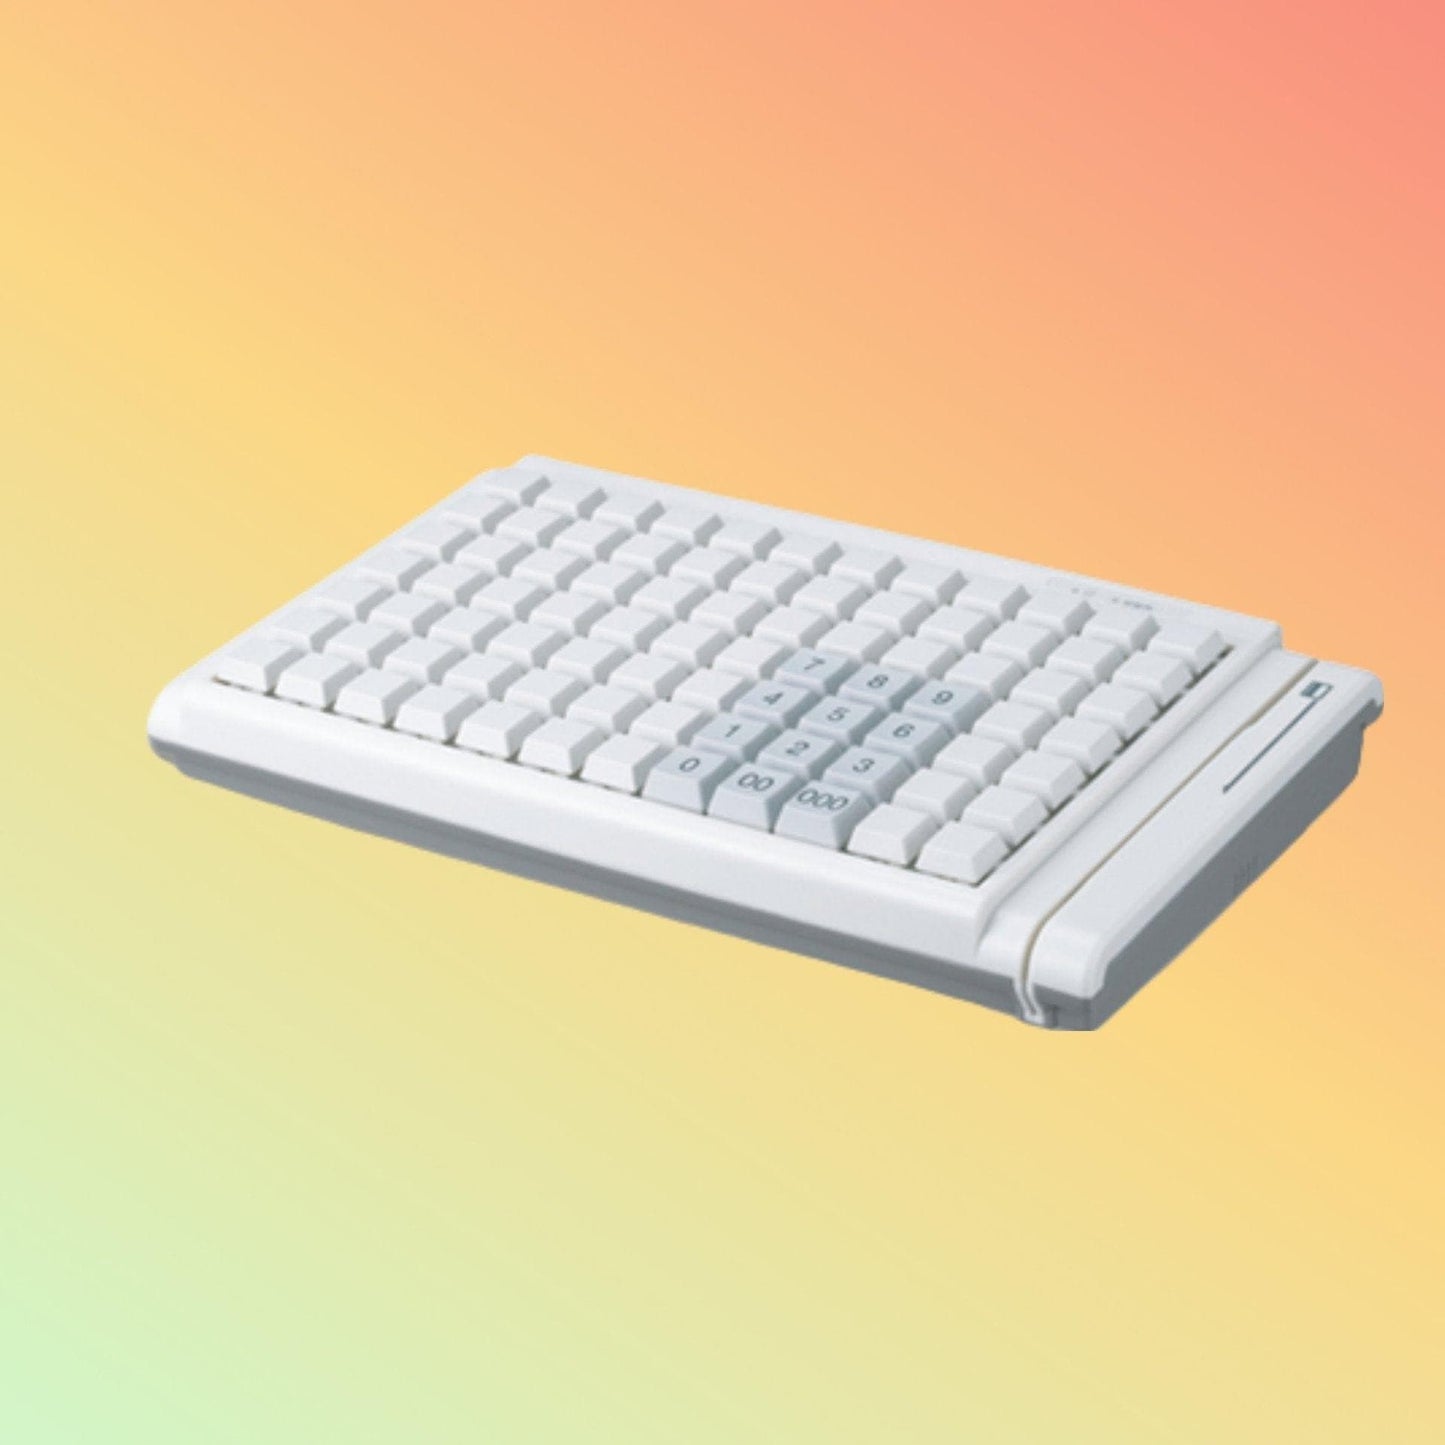 Programmable Keyboard - Postech PT-R78Keys - Neotech